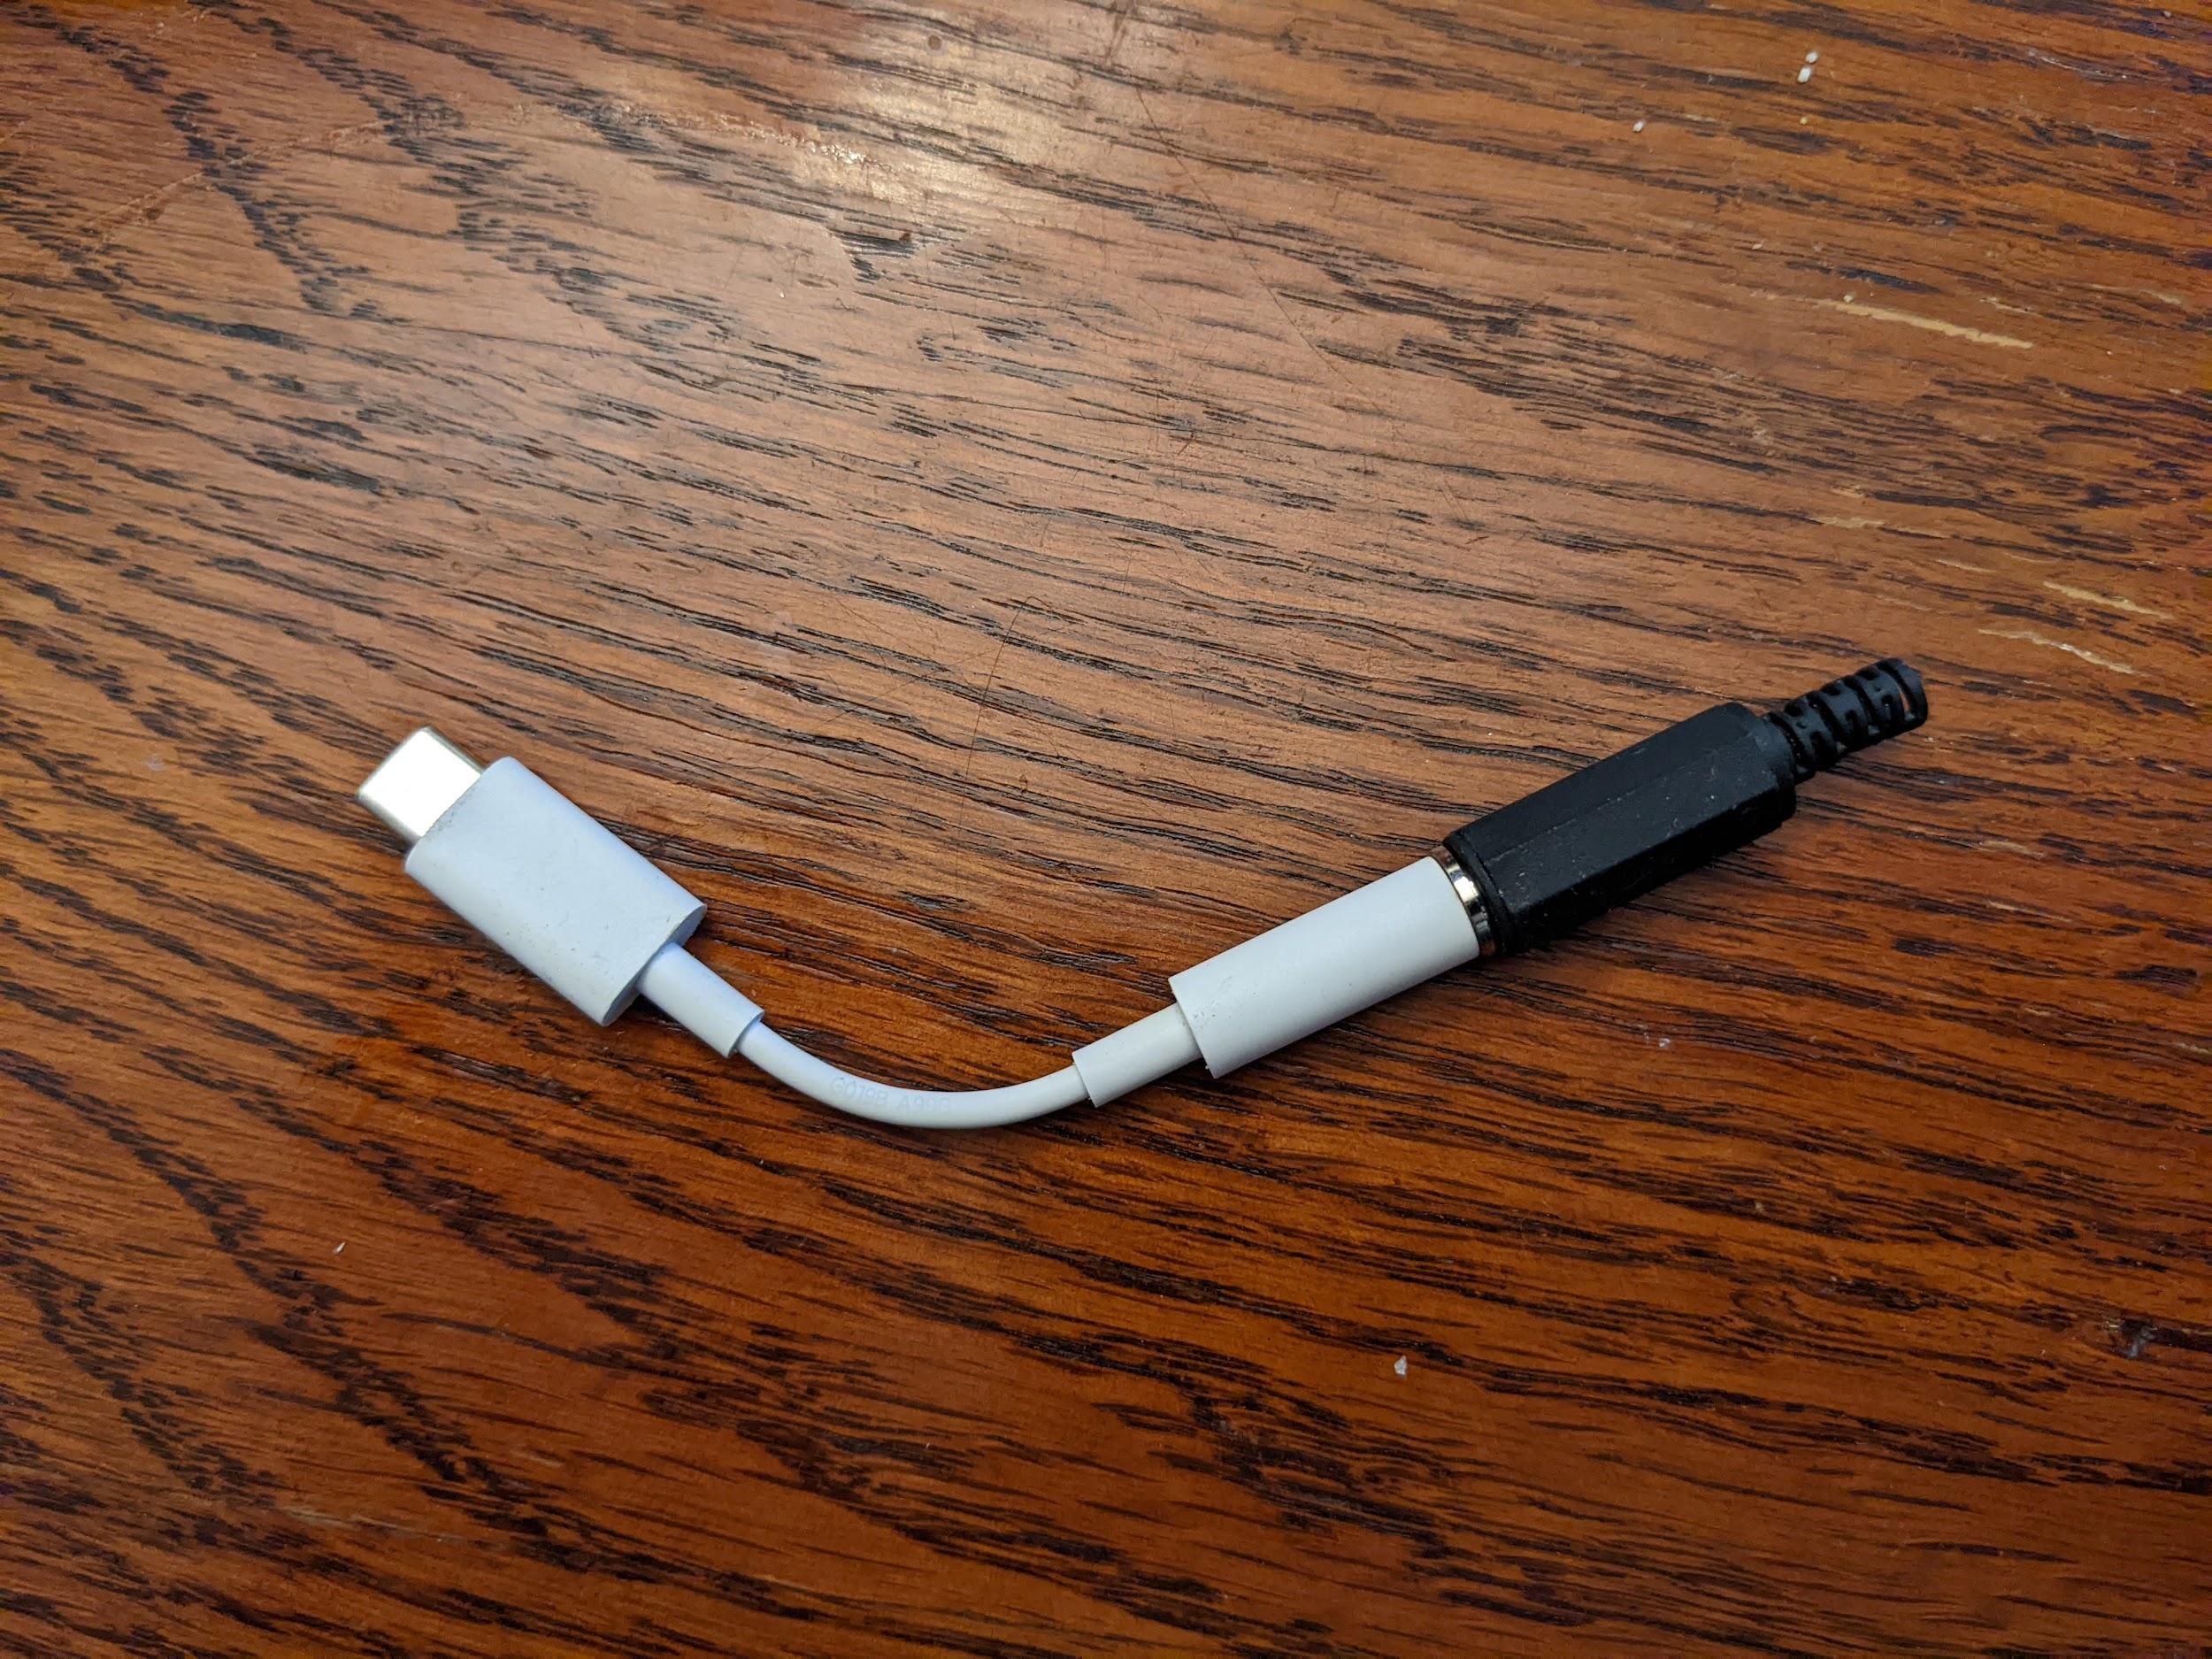 Enchufe de bucle invertido de audio conectado al adaptador de USB a analógico